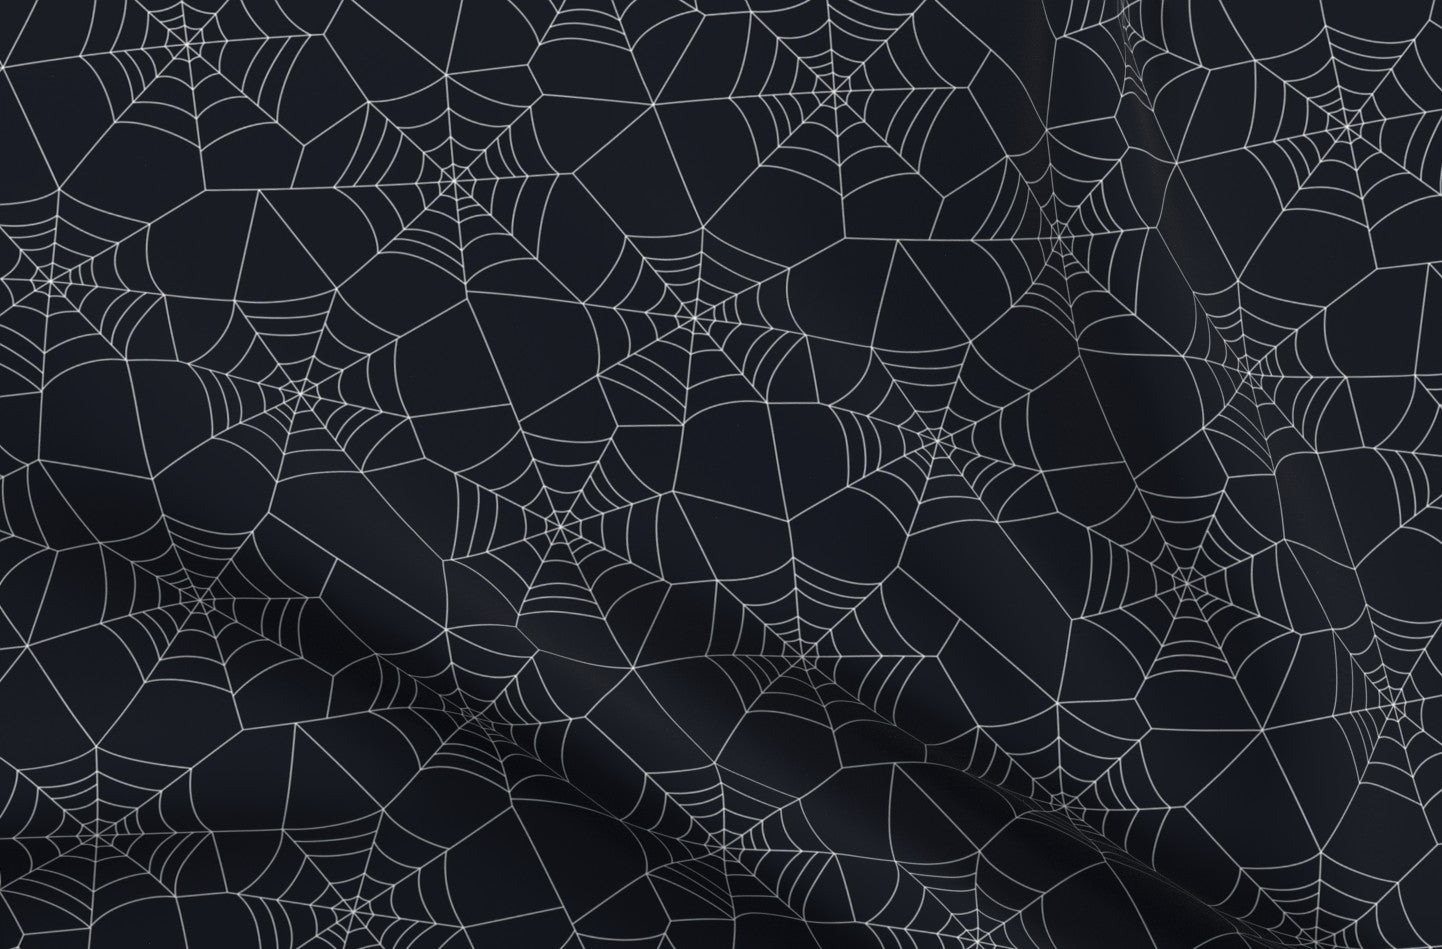 Spiderwebs Graphite Printed Fabric by Studio Ten Design